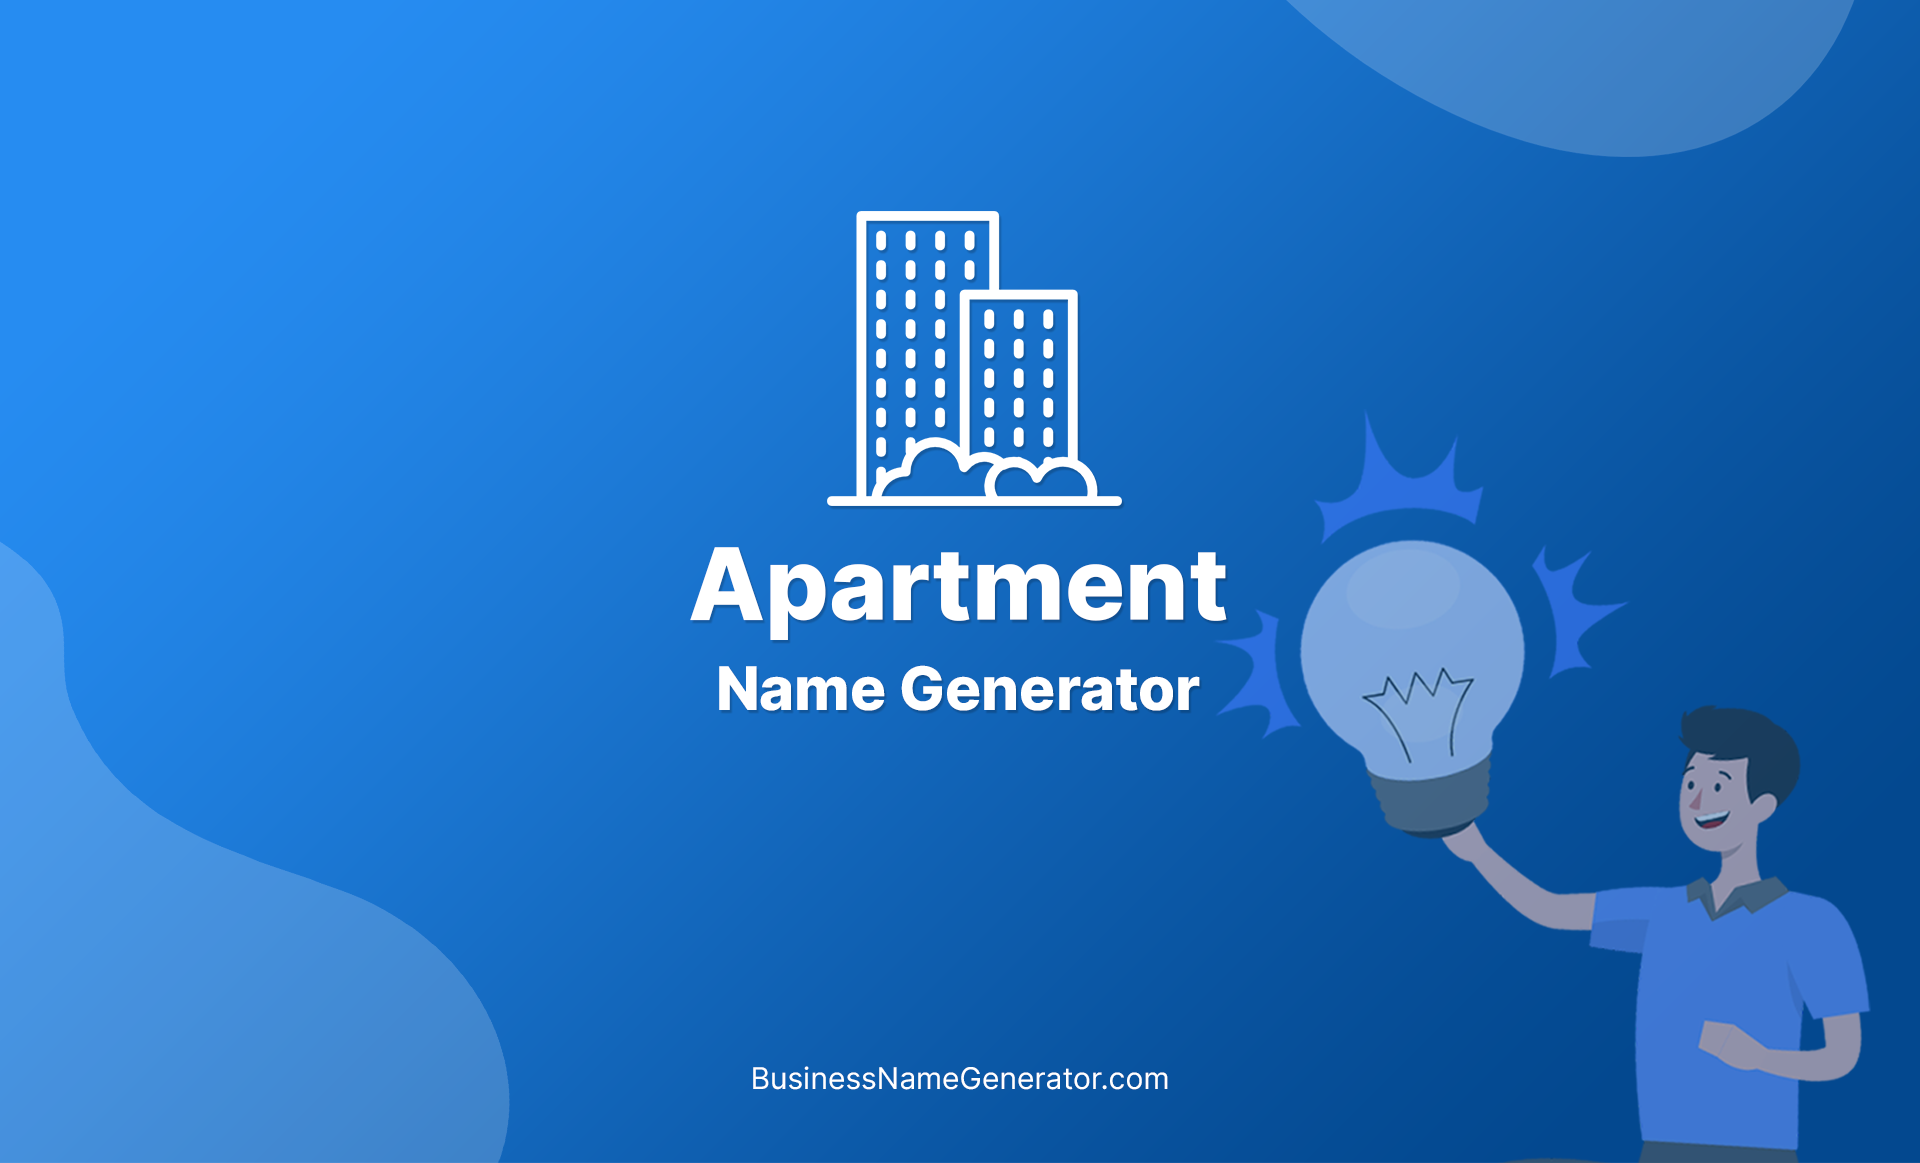 Apartment Name Generator